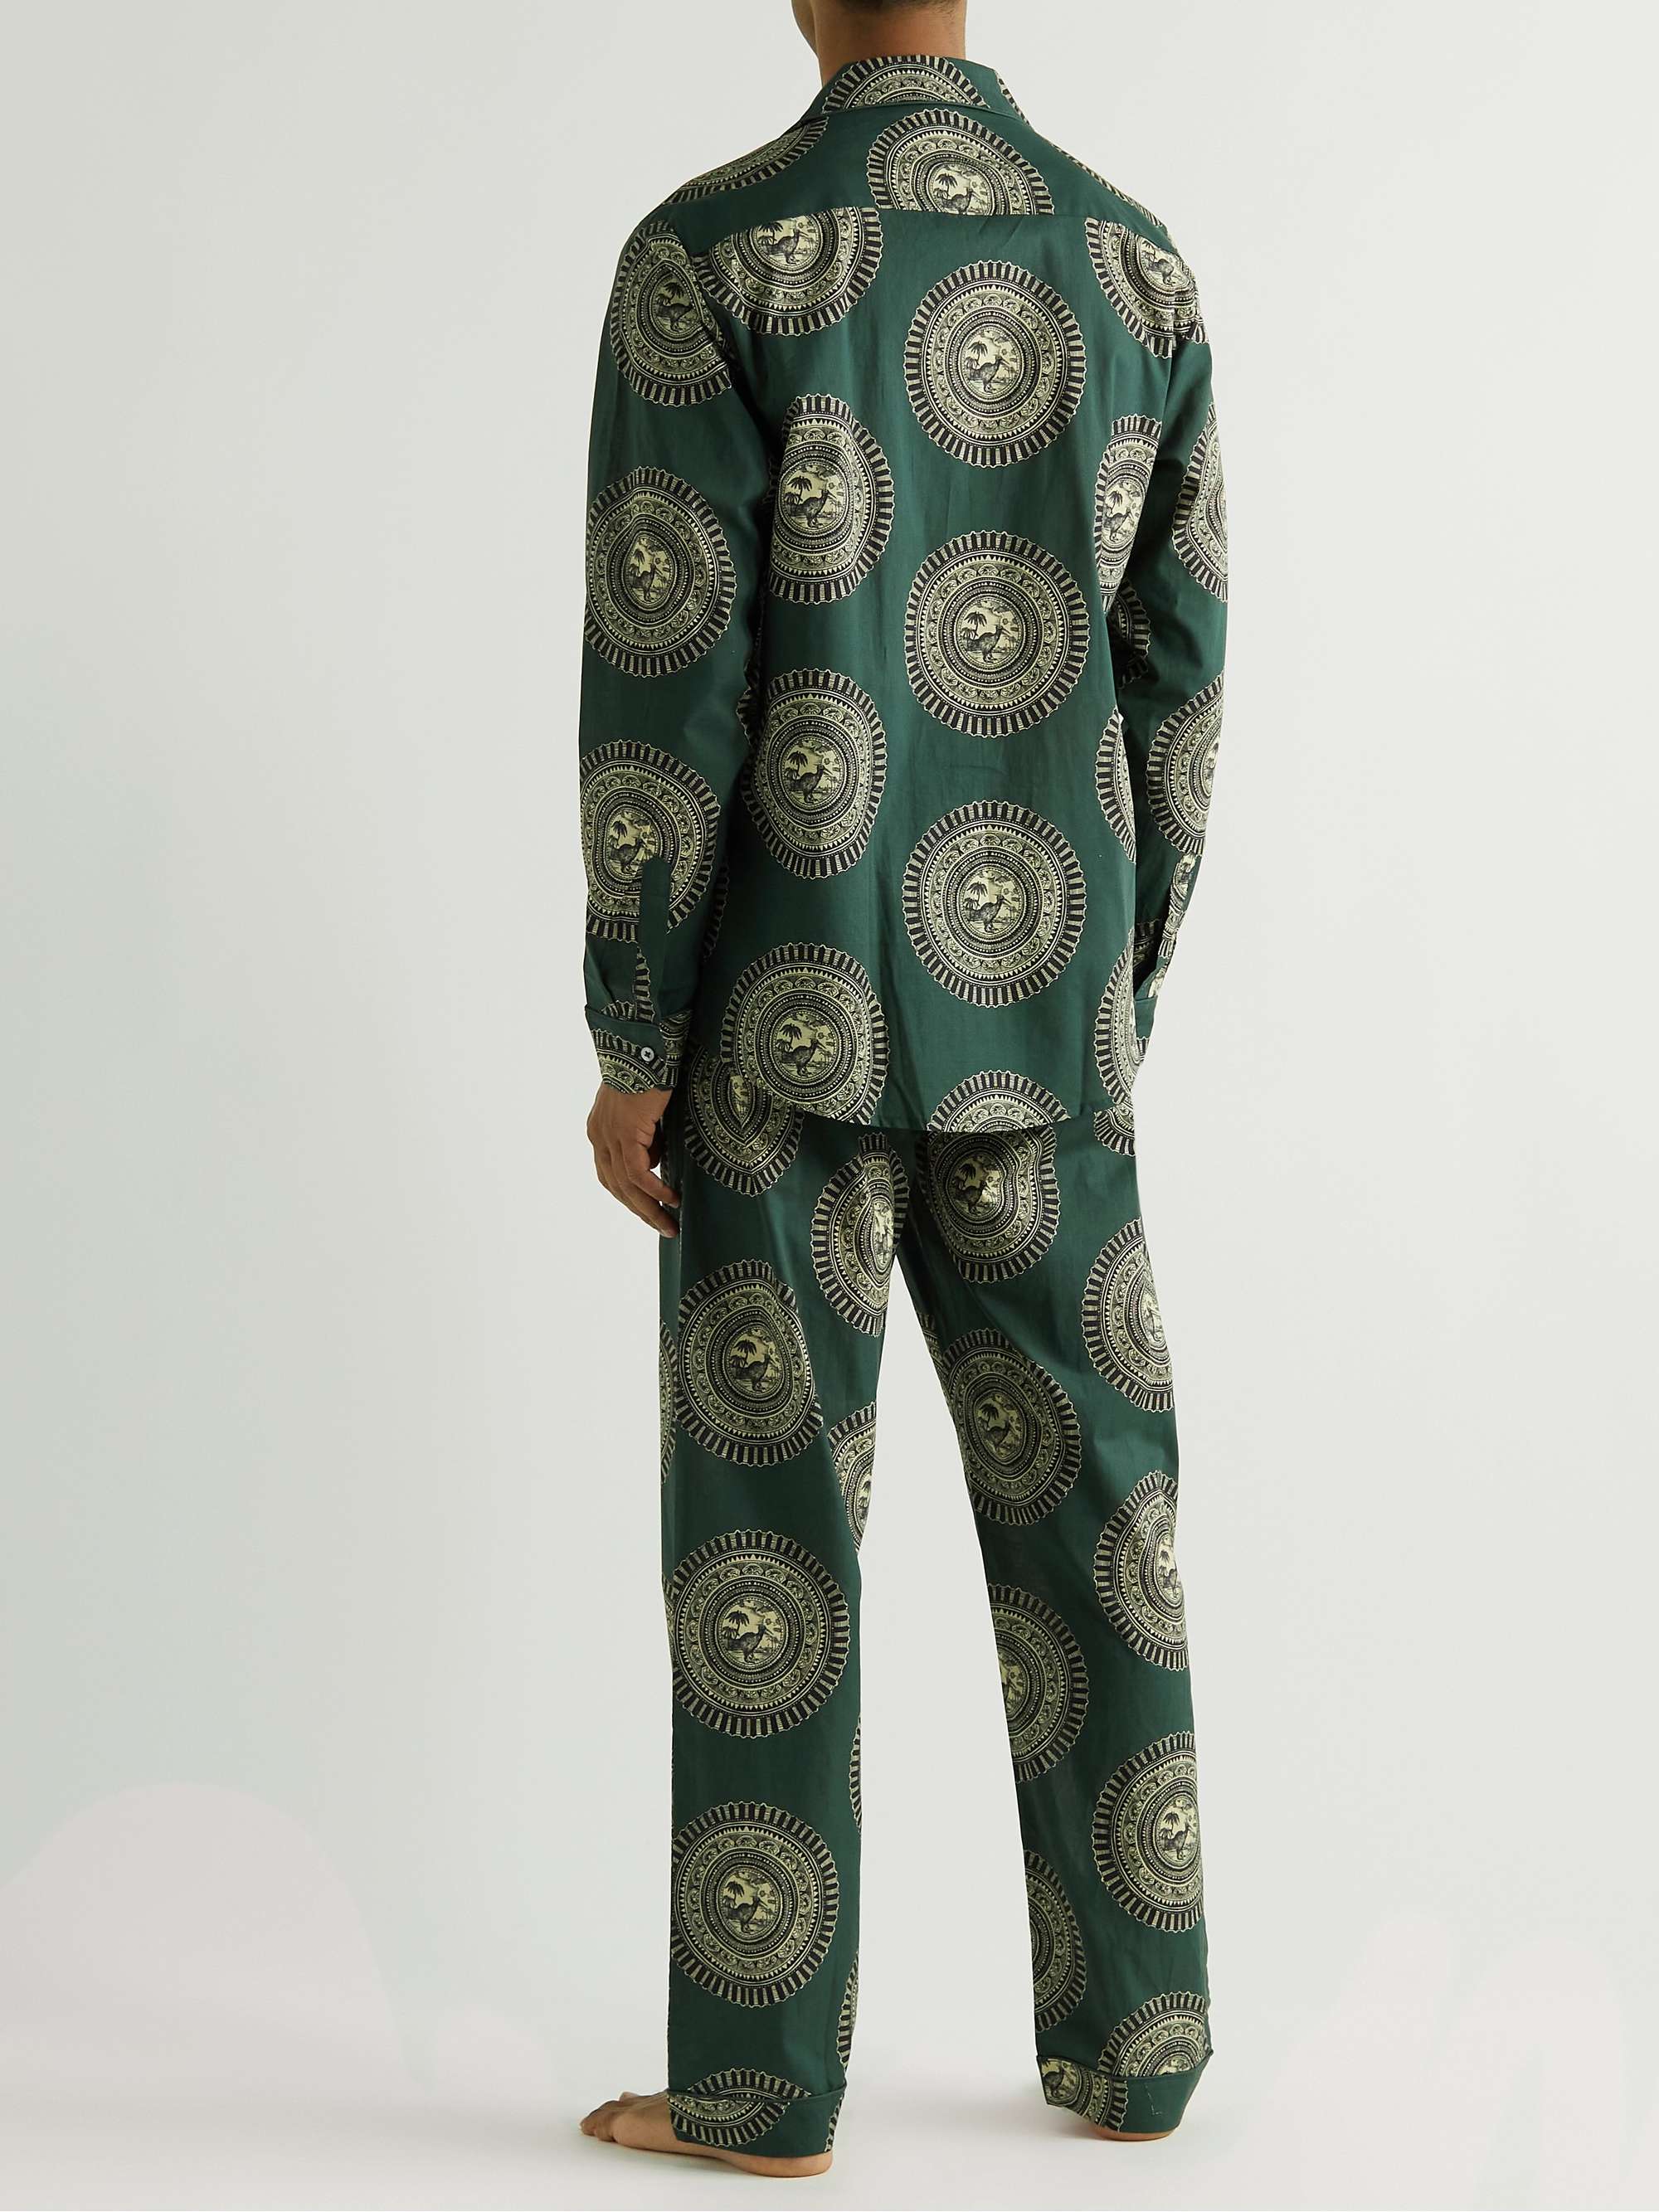 DESMOND & DEMPSEY Printed Cotton Pyjama Set